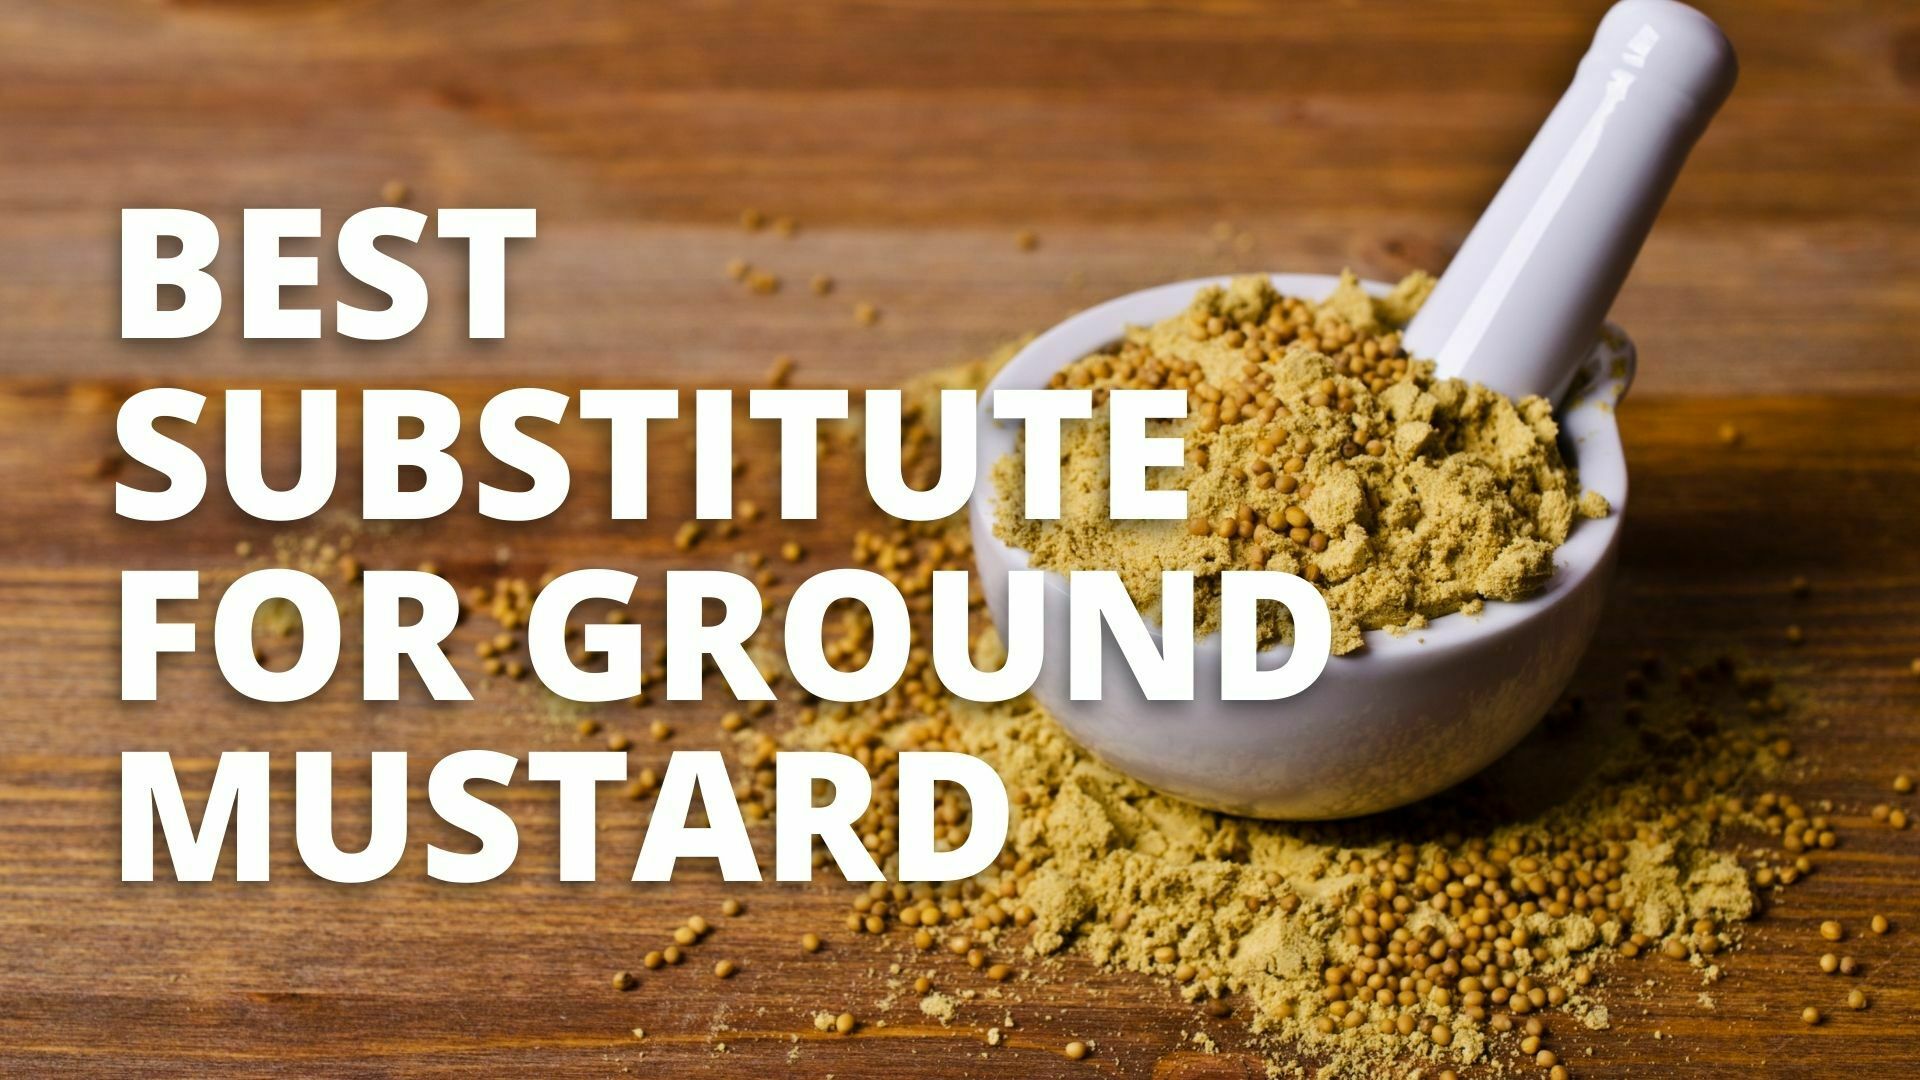 Best substitute for ground mustard